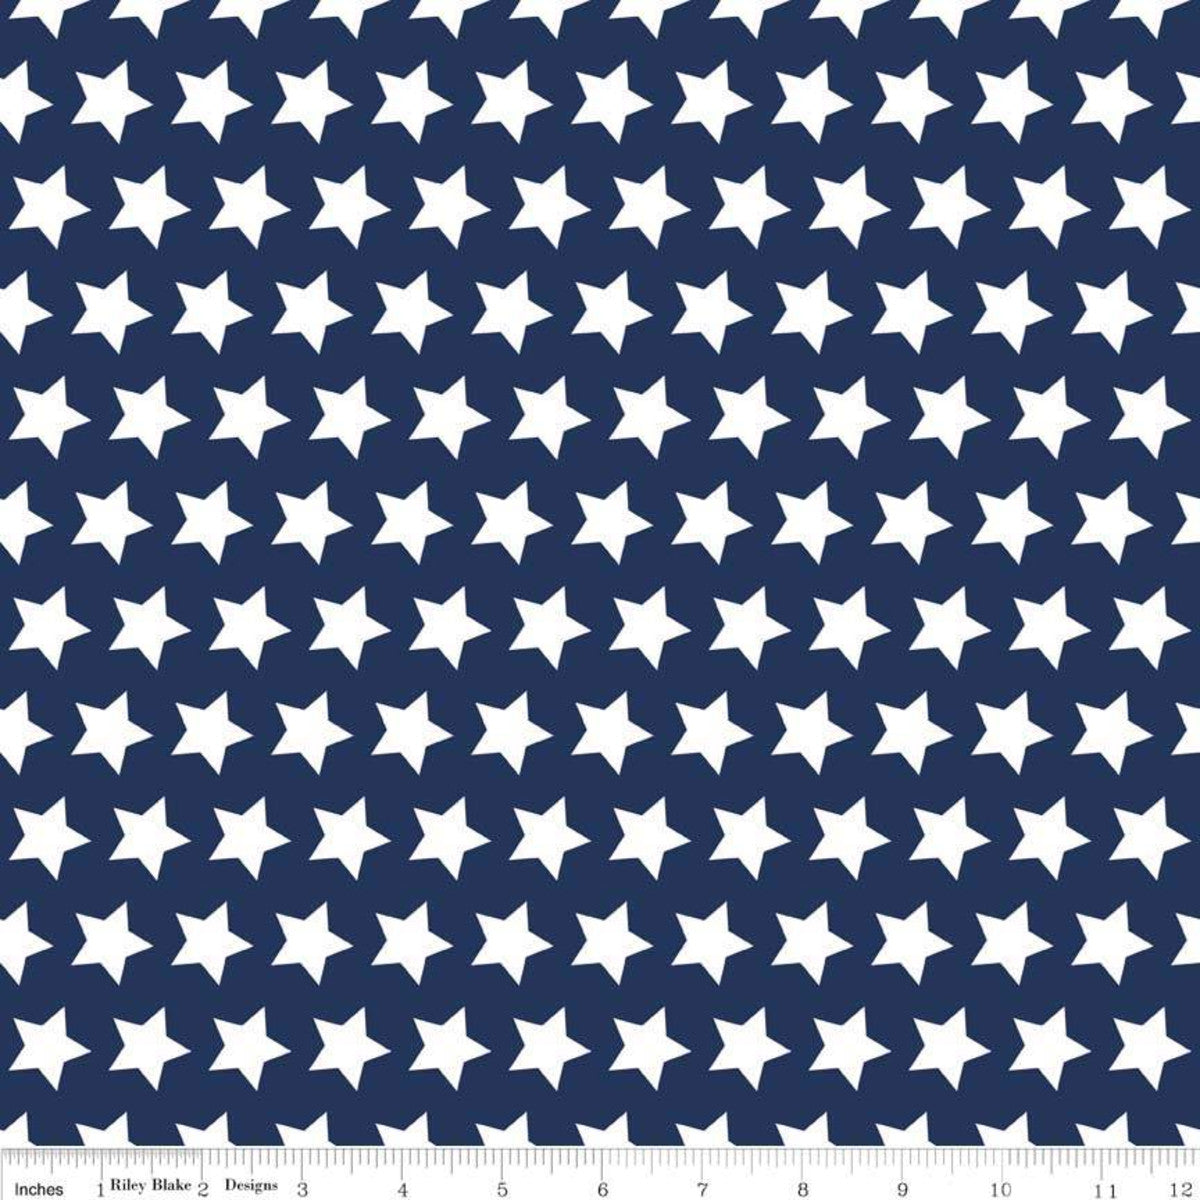 Stars Navy Yardage by Riley Blake Designs